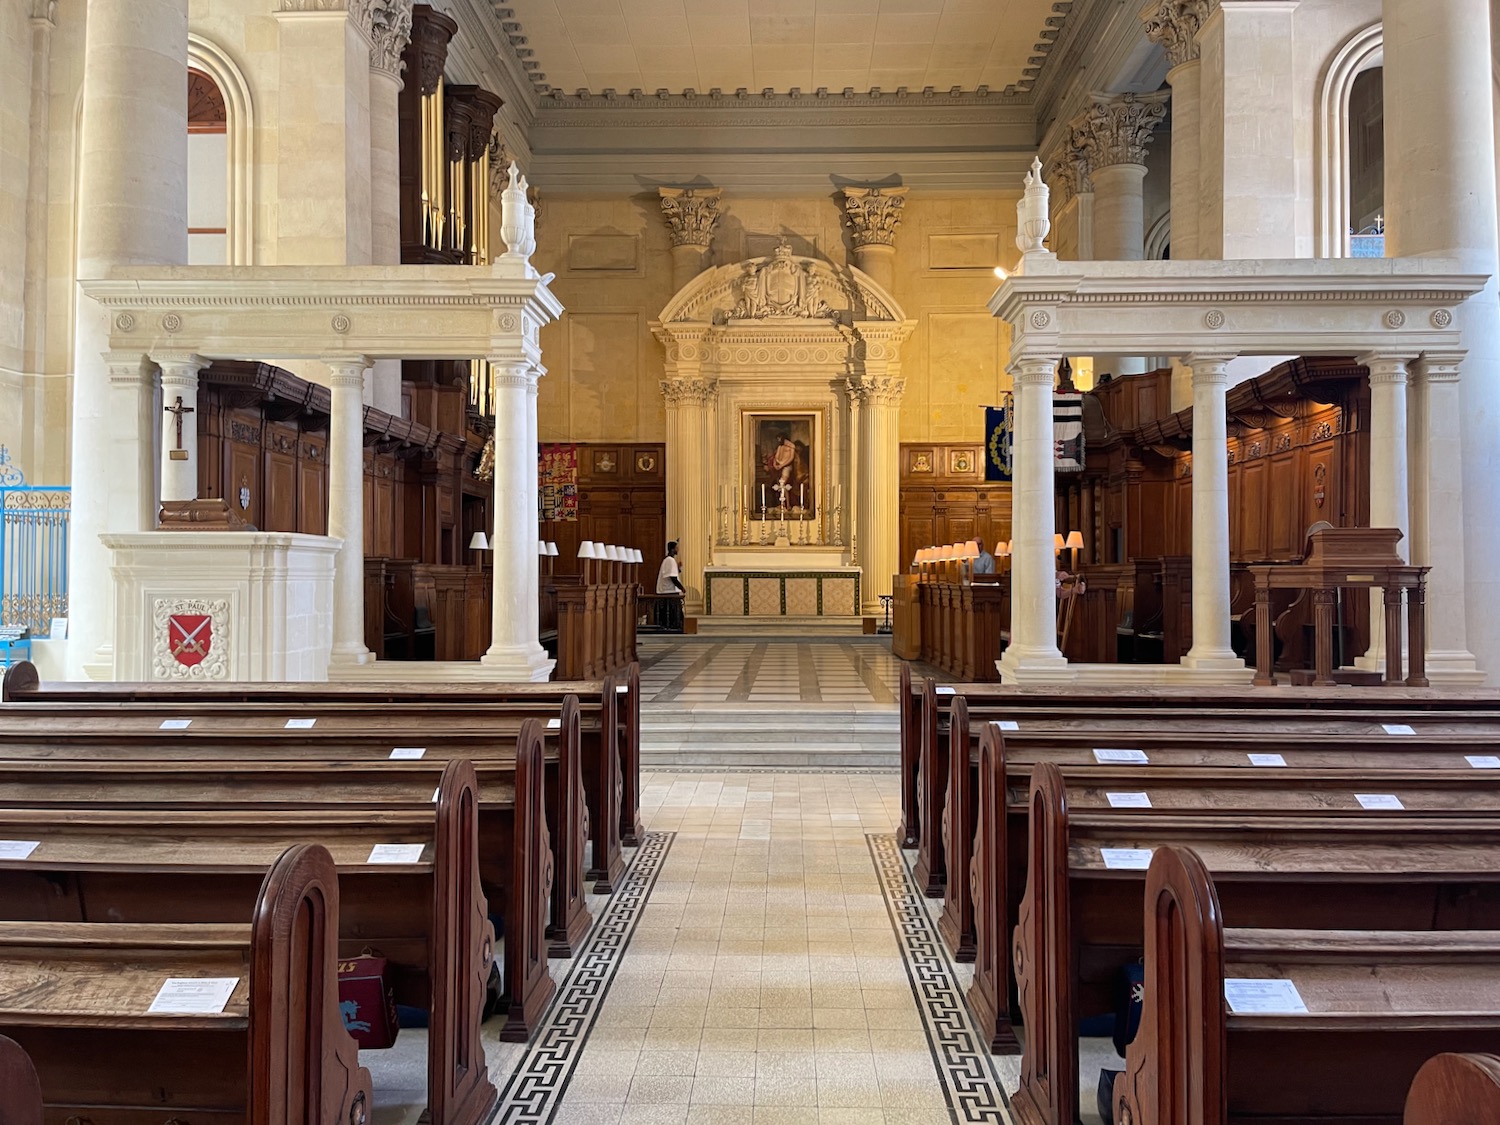 Miserable: Attending Church In Malta - Stay and Let's Fly | Digital Noch Digital Noch